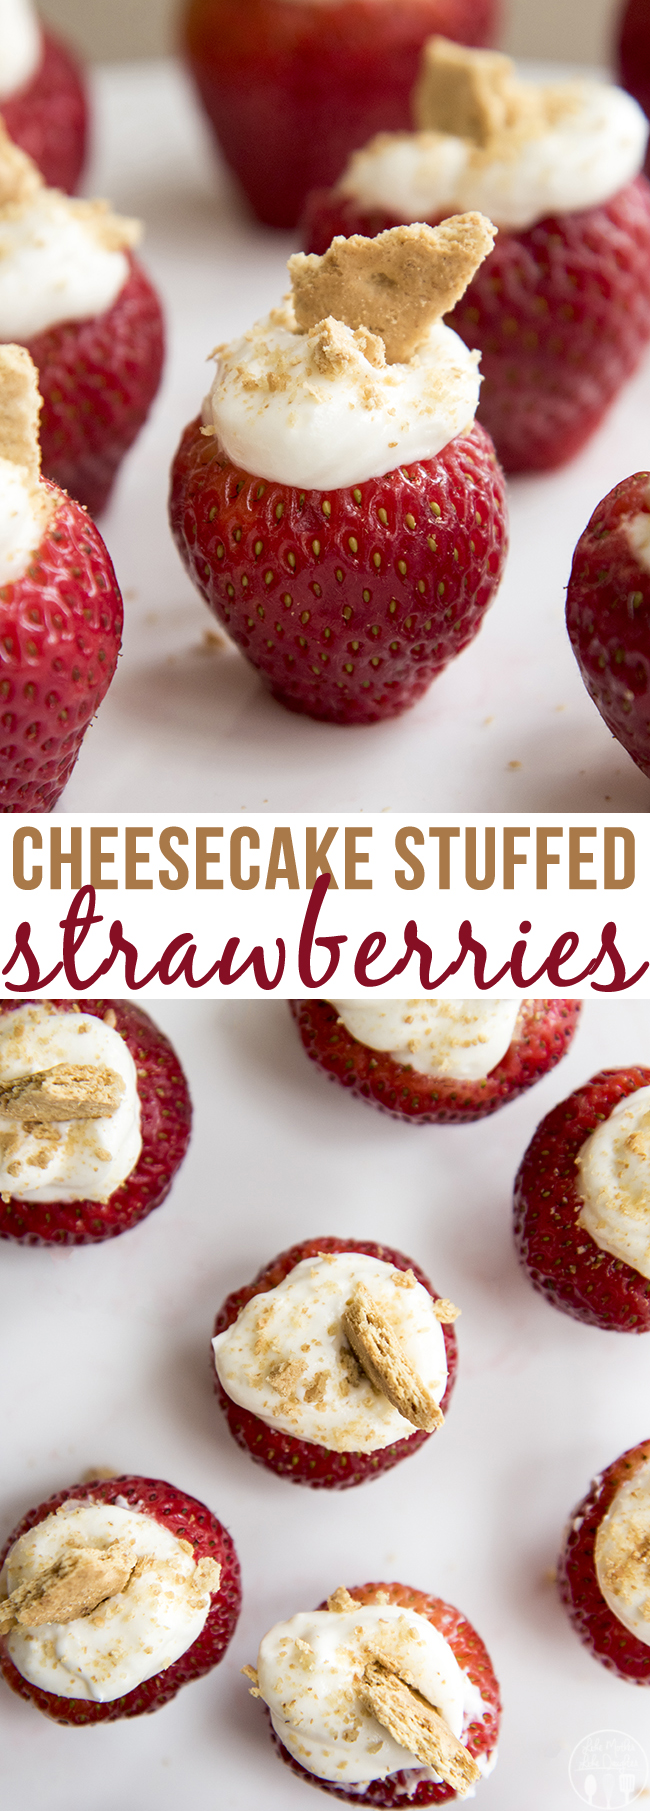 Title card for cheesecake stuffed strawberries.